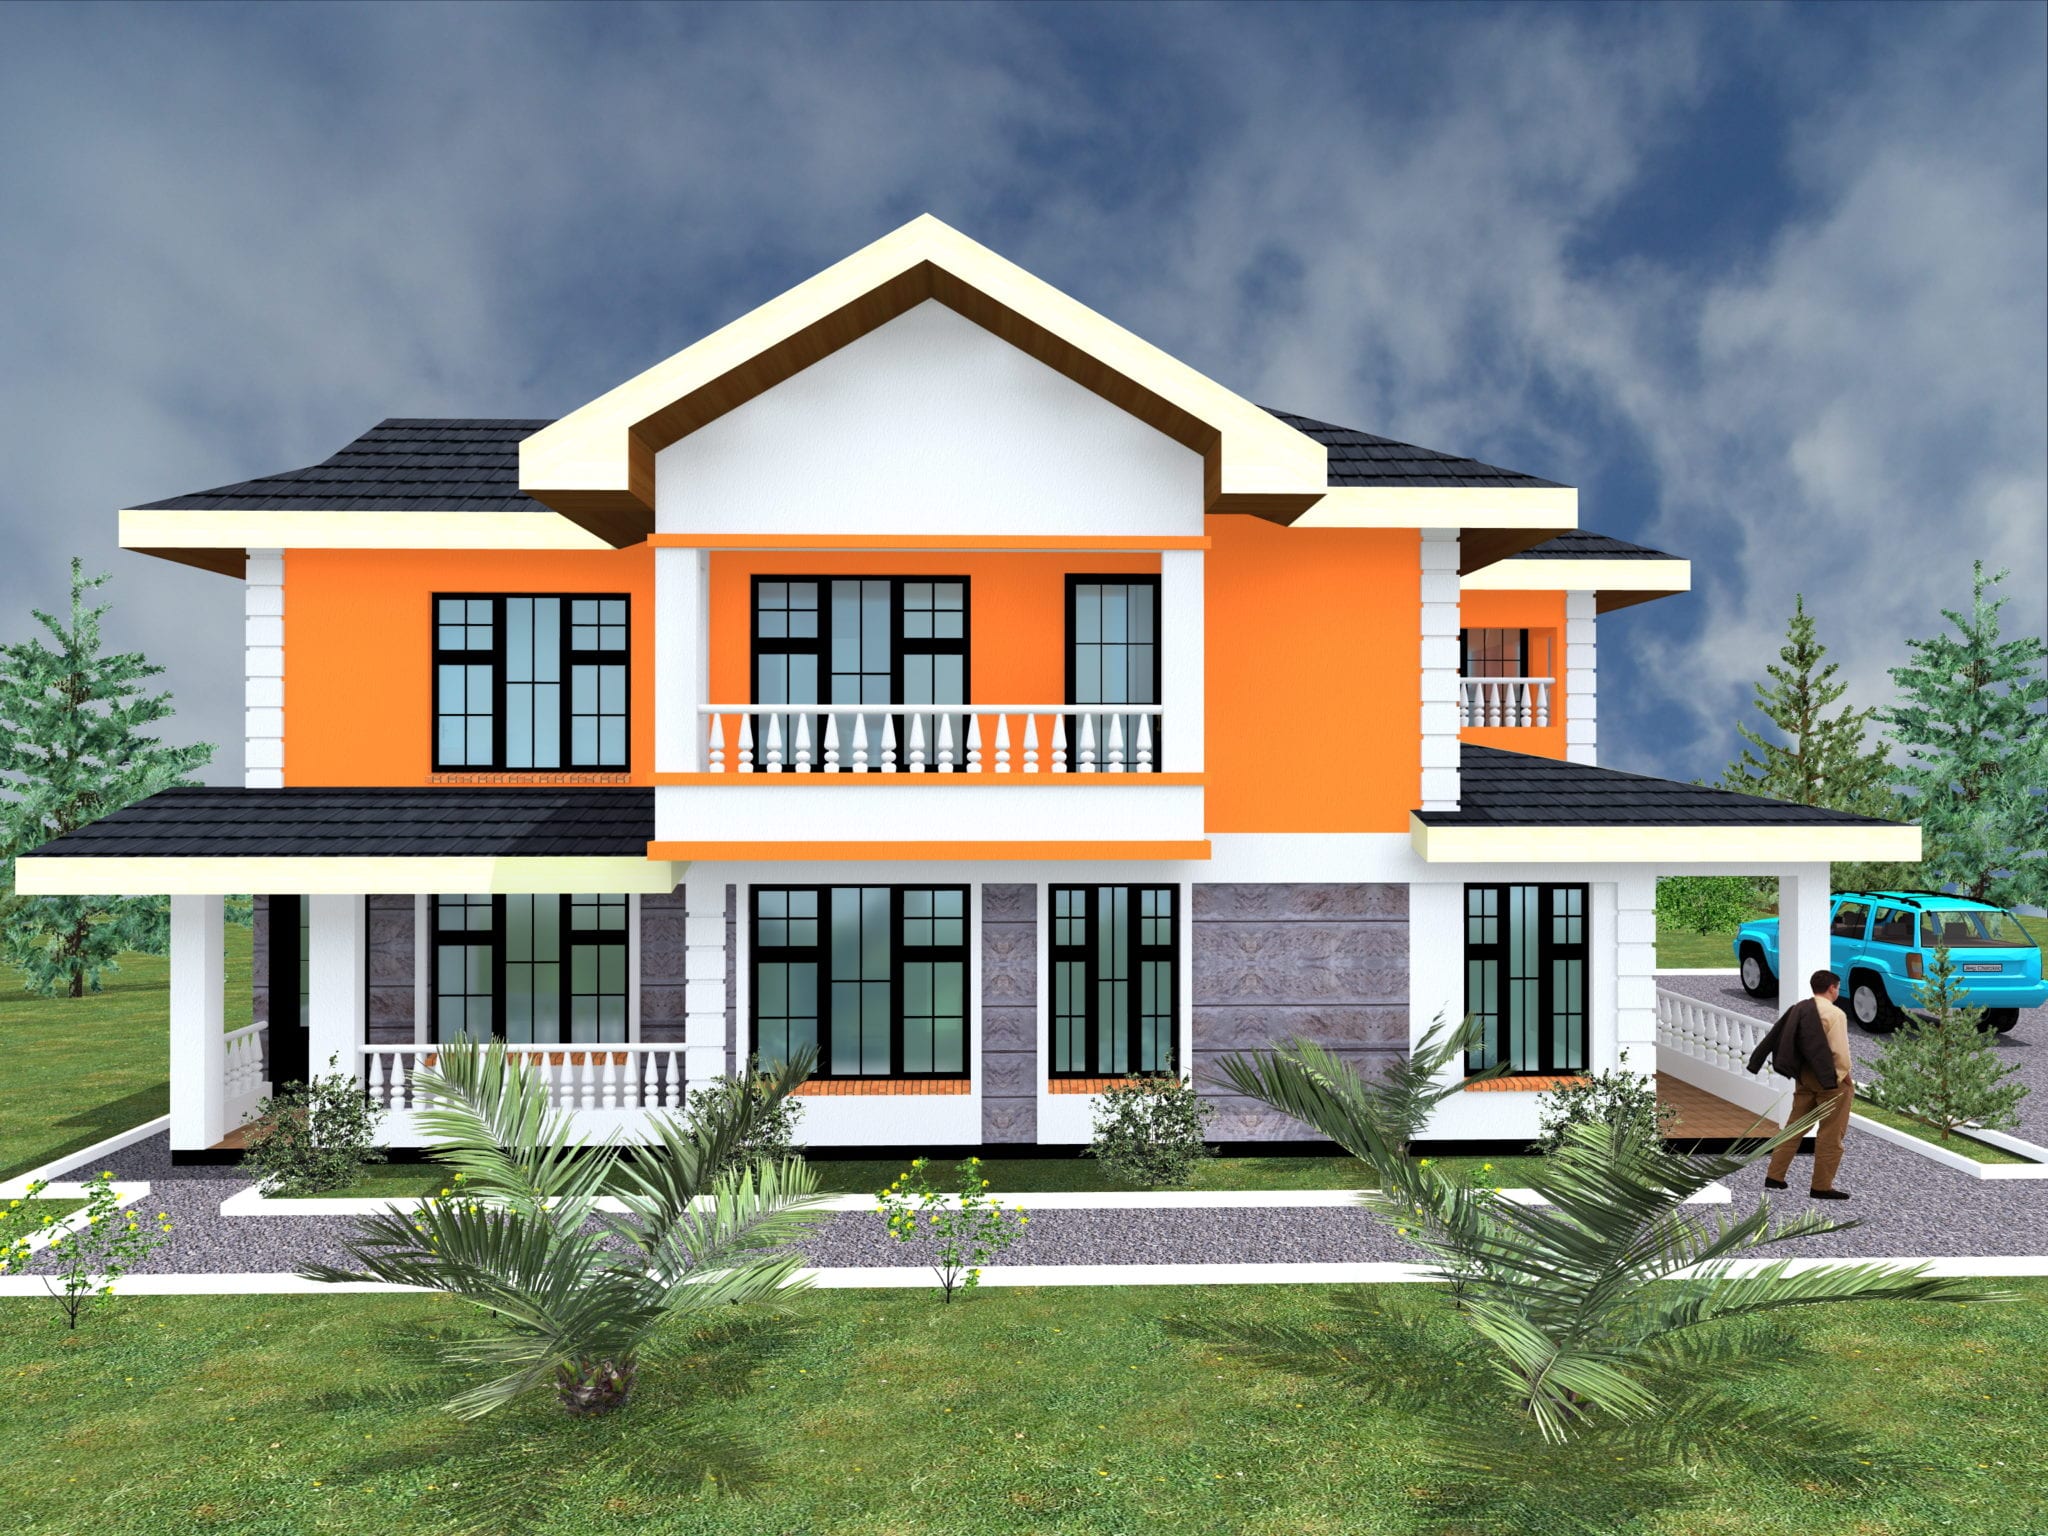 4 Bedroom House Plans in KenyaHPD Consult